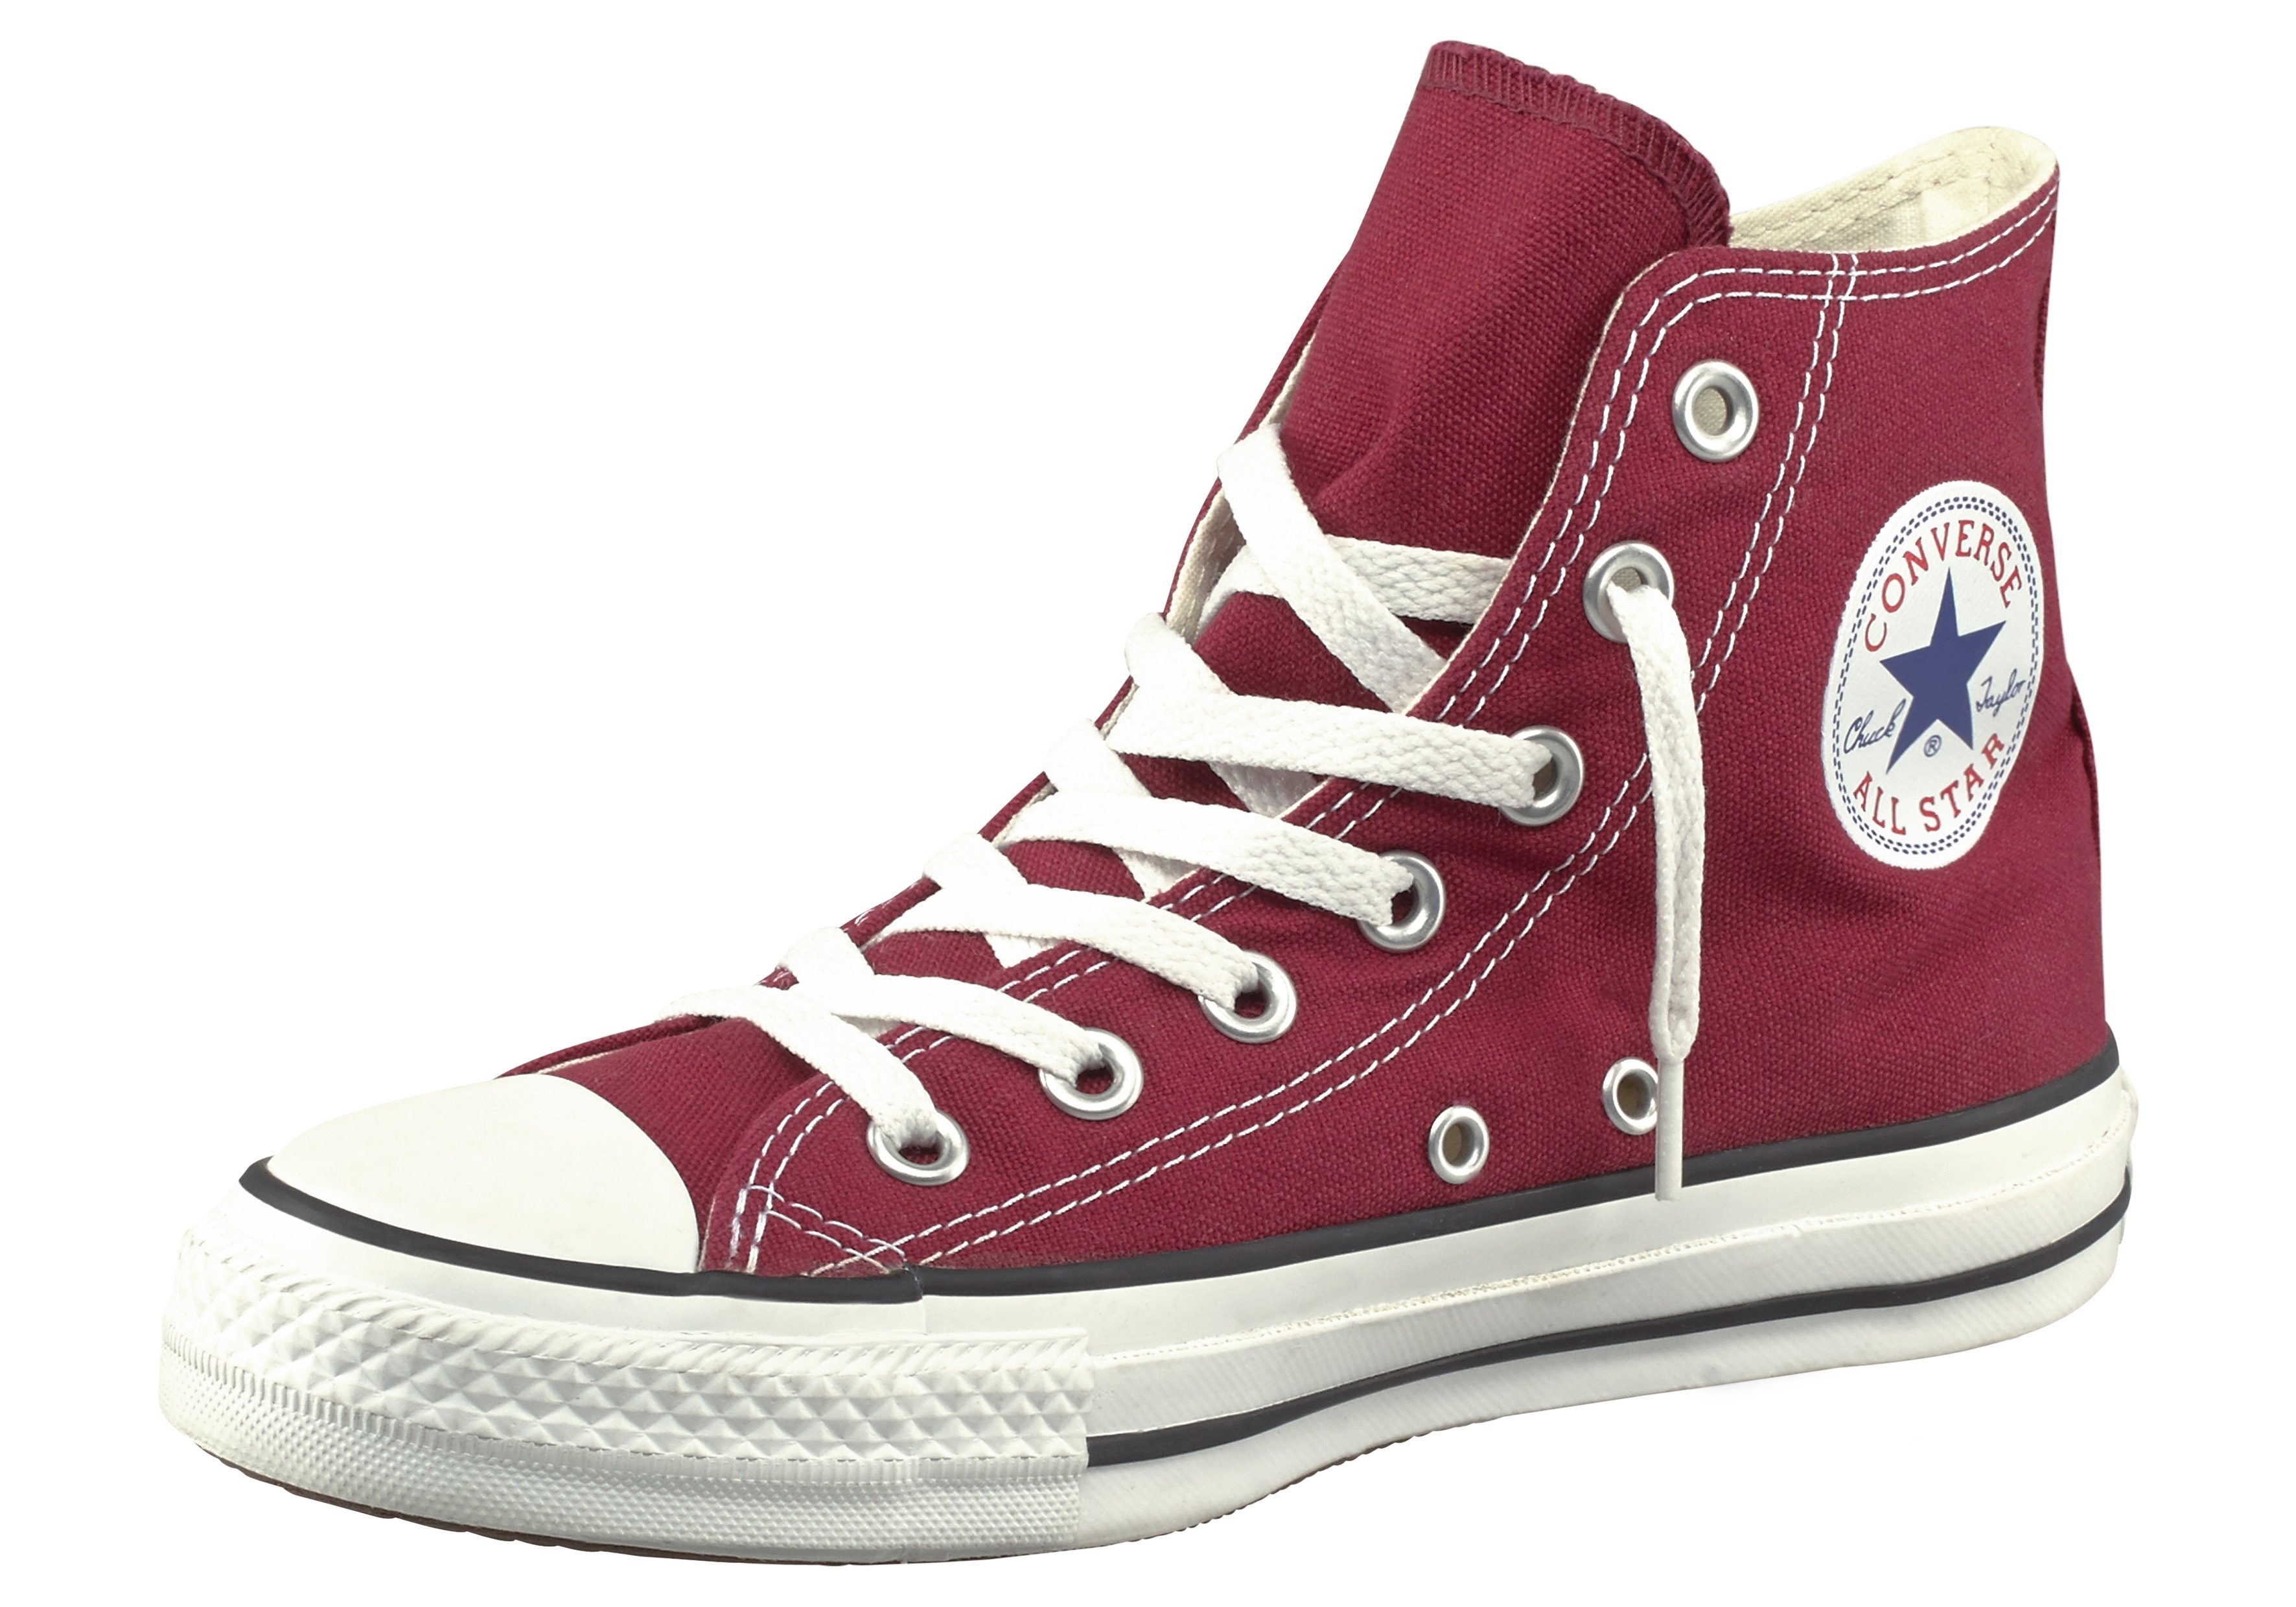 Converse »Chuck Taylor All Star Hi« Sneaker kaufen | OTTO